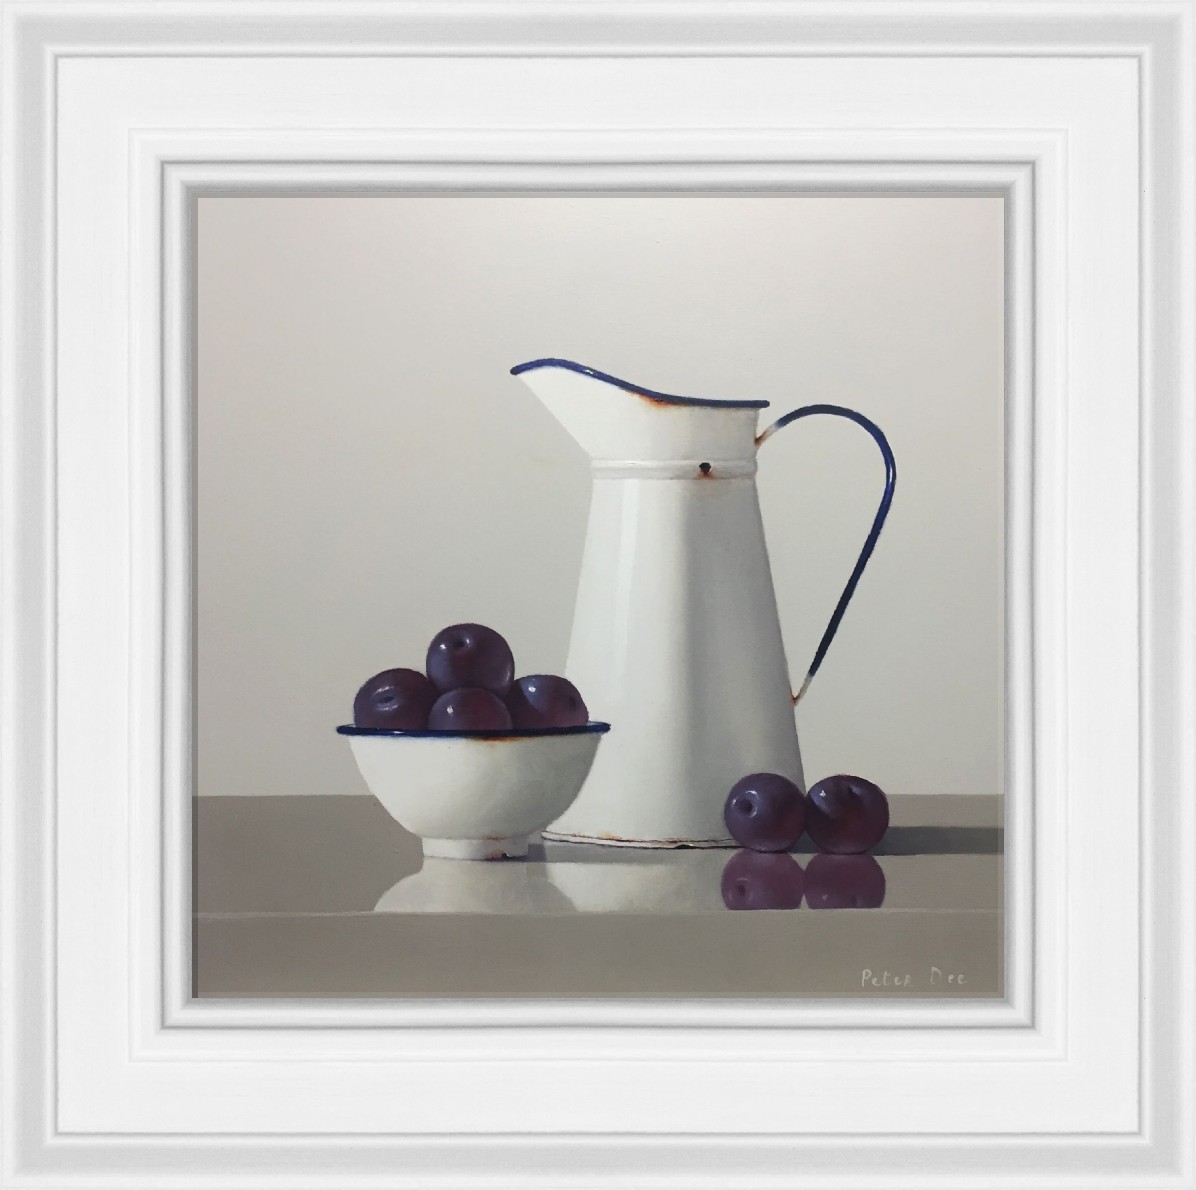 Vintage Enamelware with plums by Peter Dee